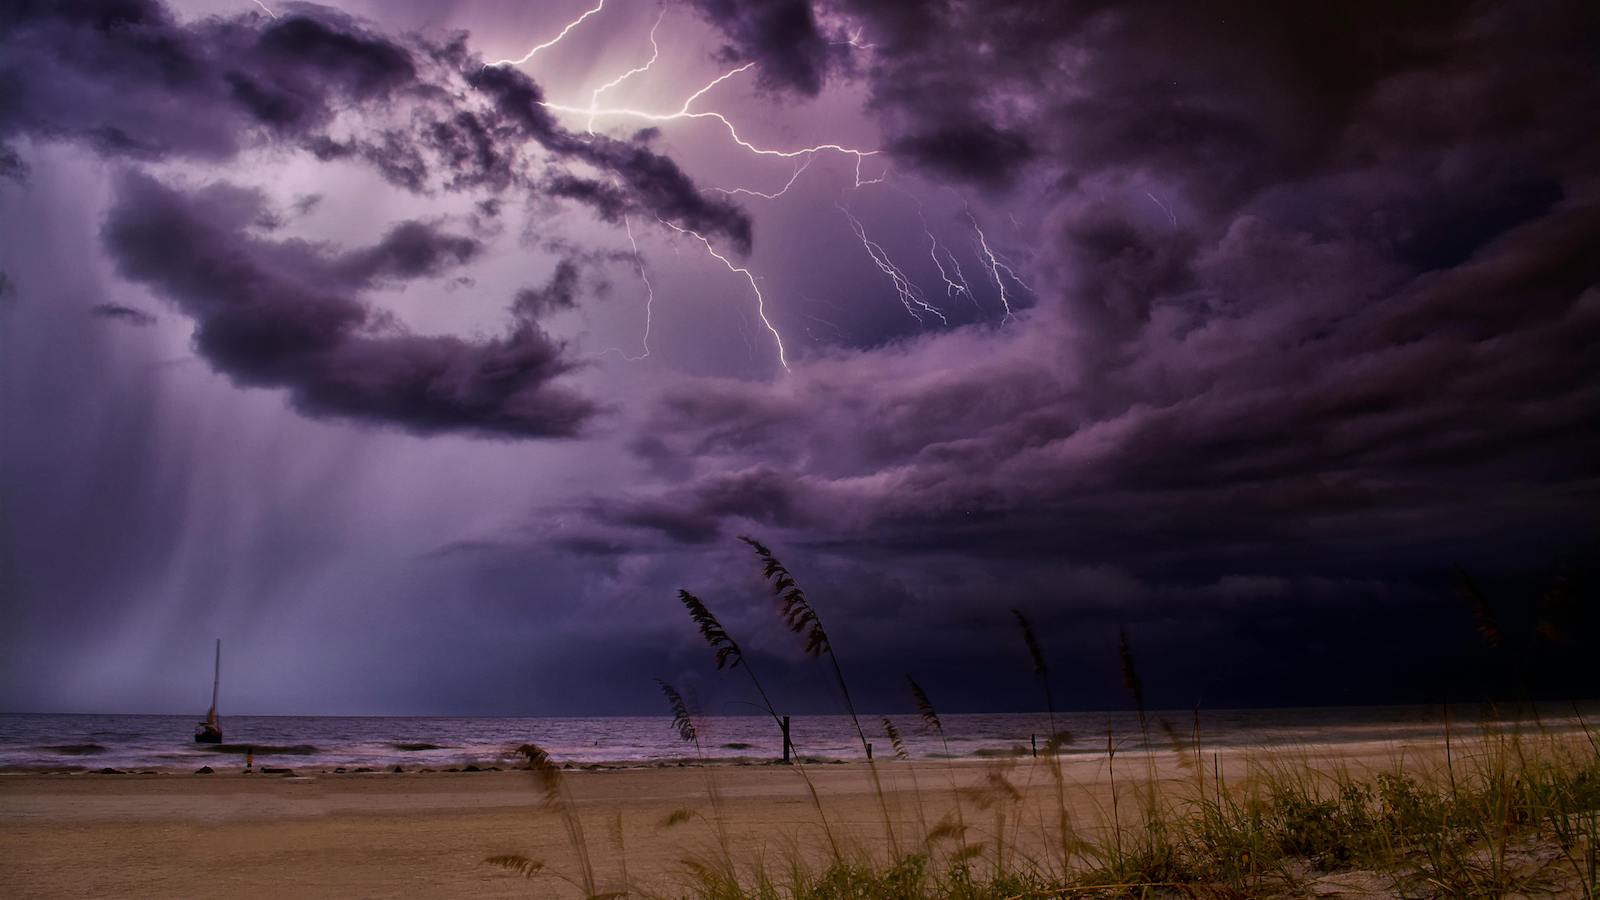 Lightning strikes and purple sky on a seashore